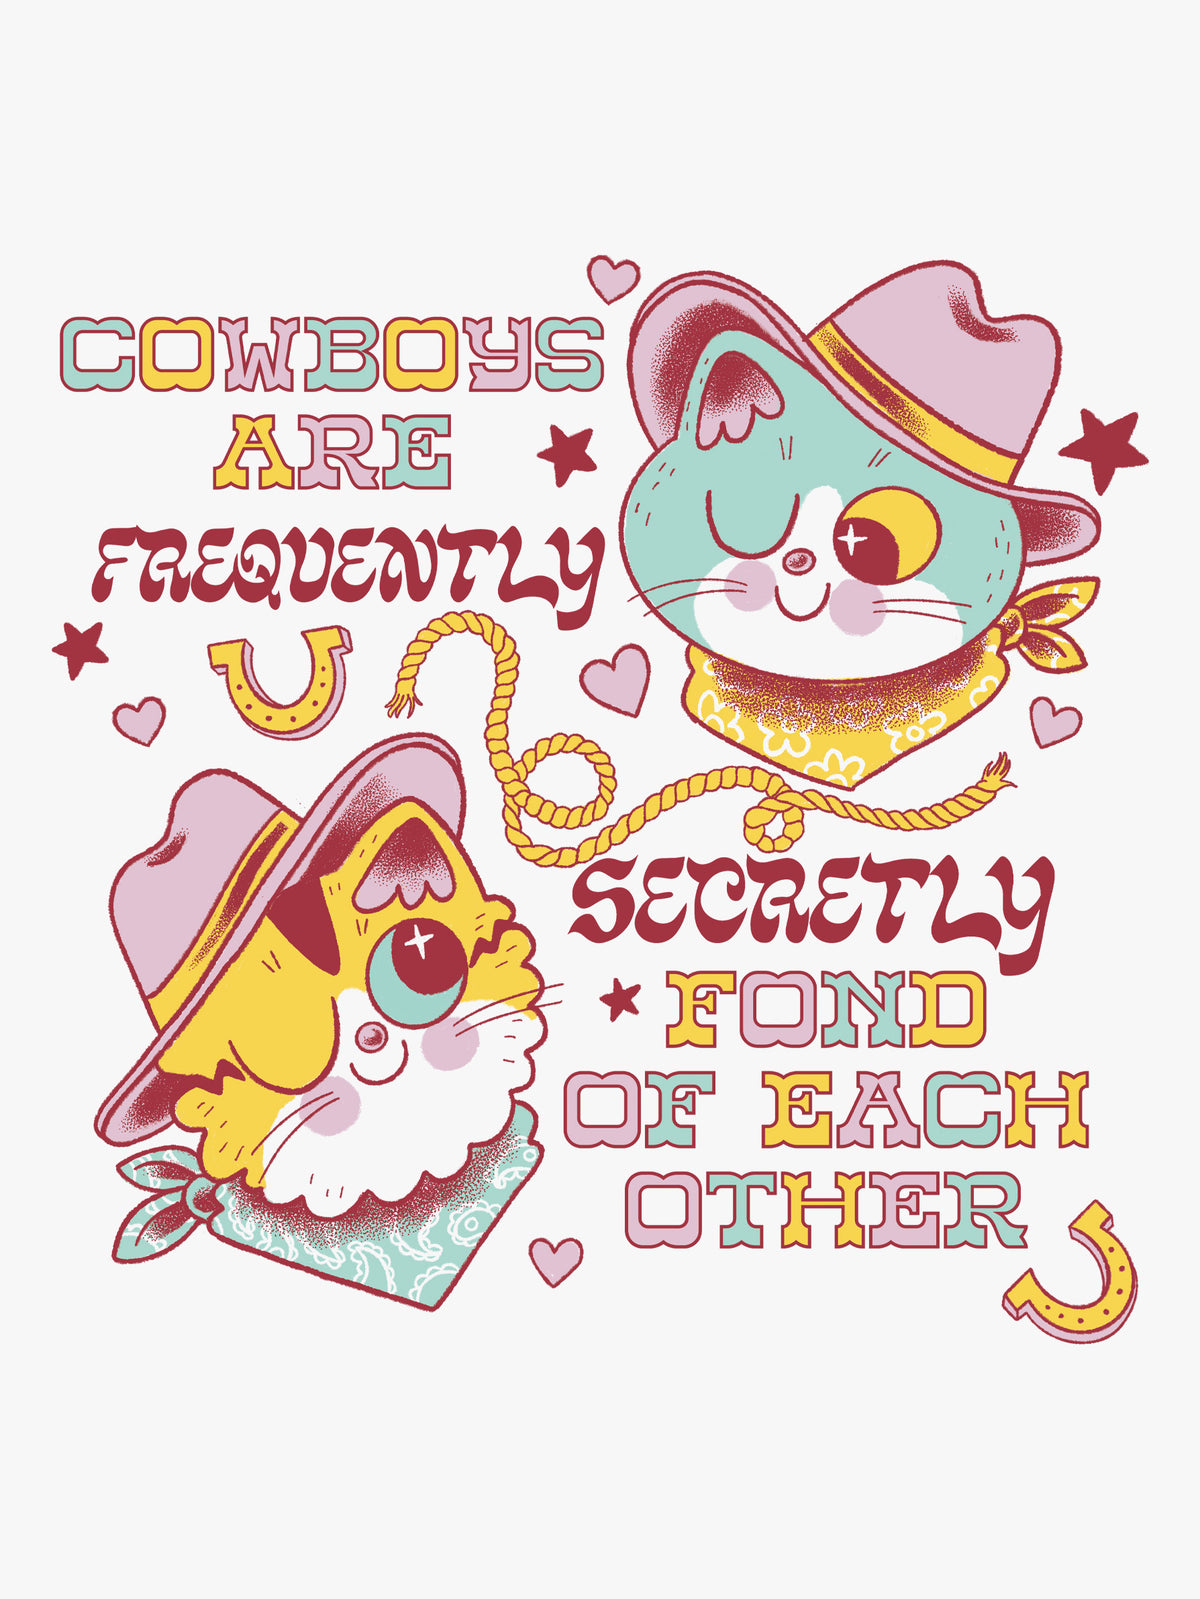 Cowboy Cats by Pinkgabbercat